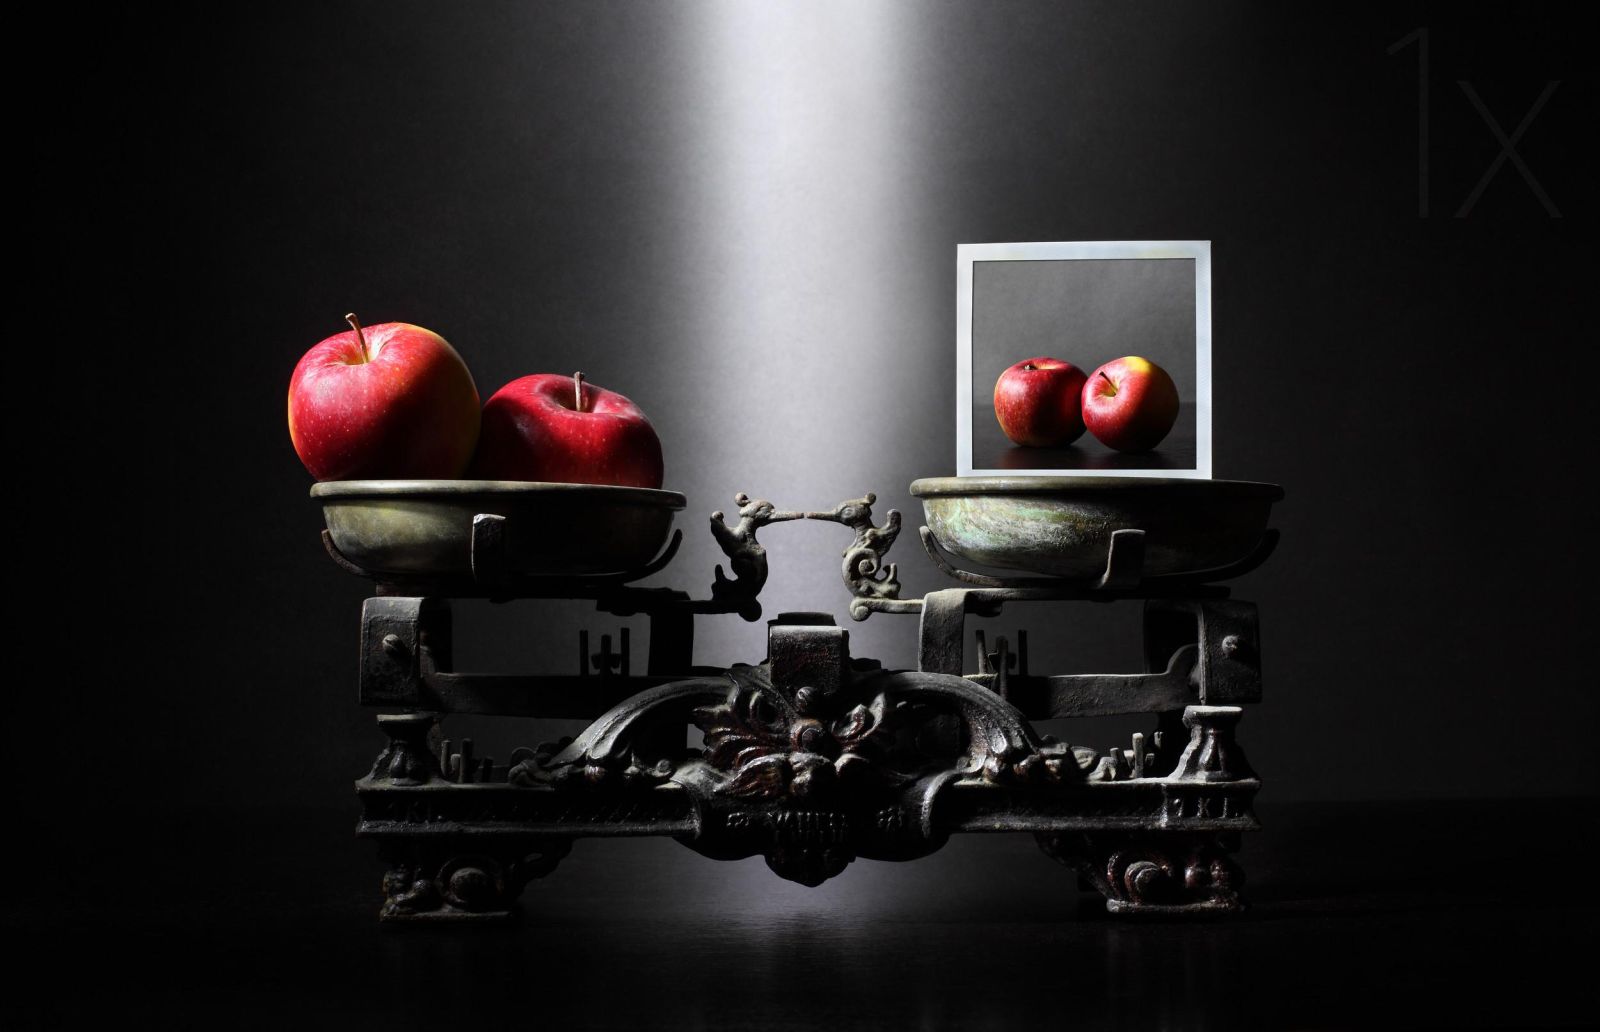 18 vintage photography weigh machine apple by victoria ivanova